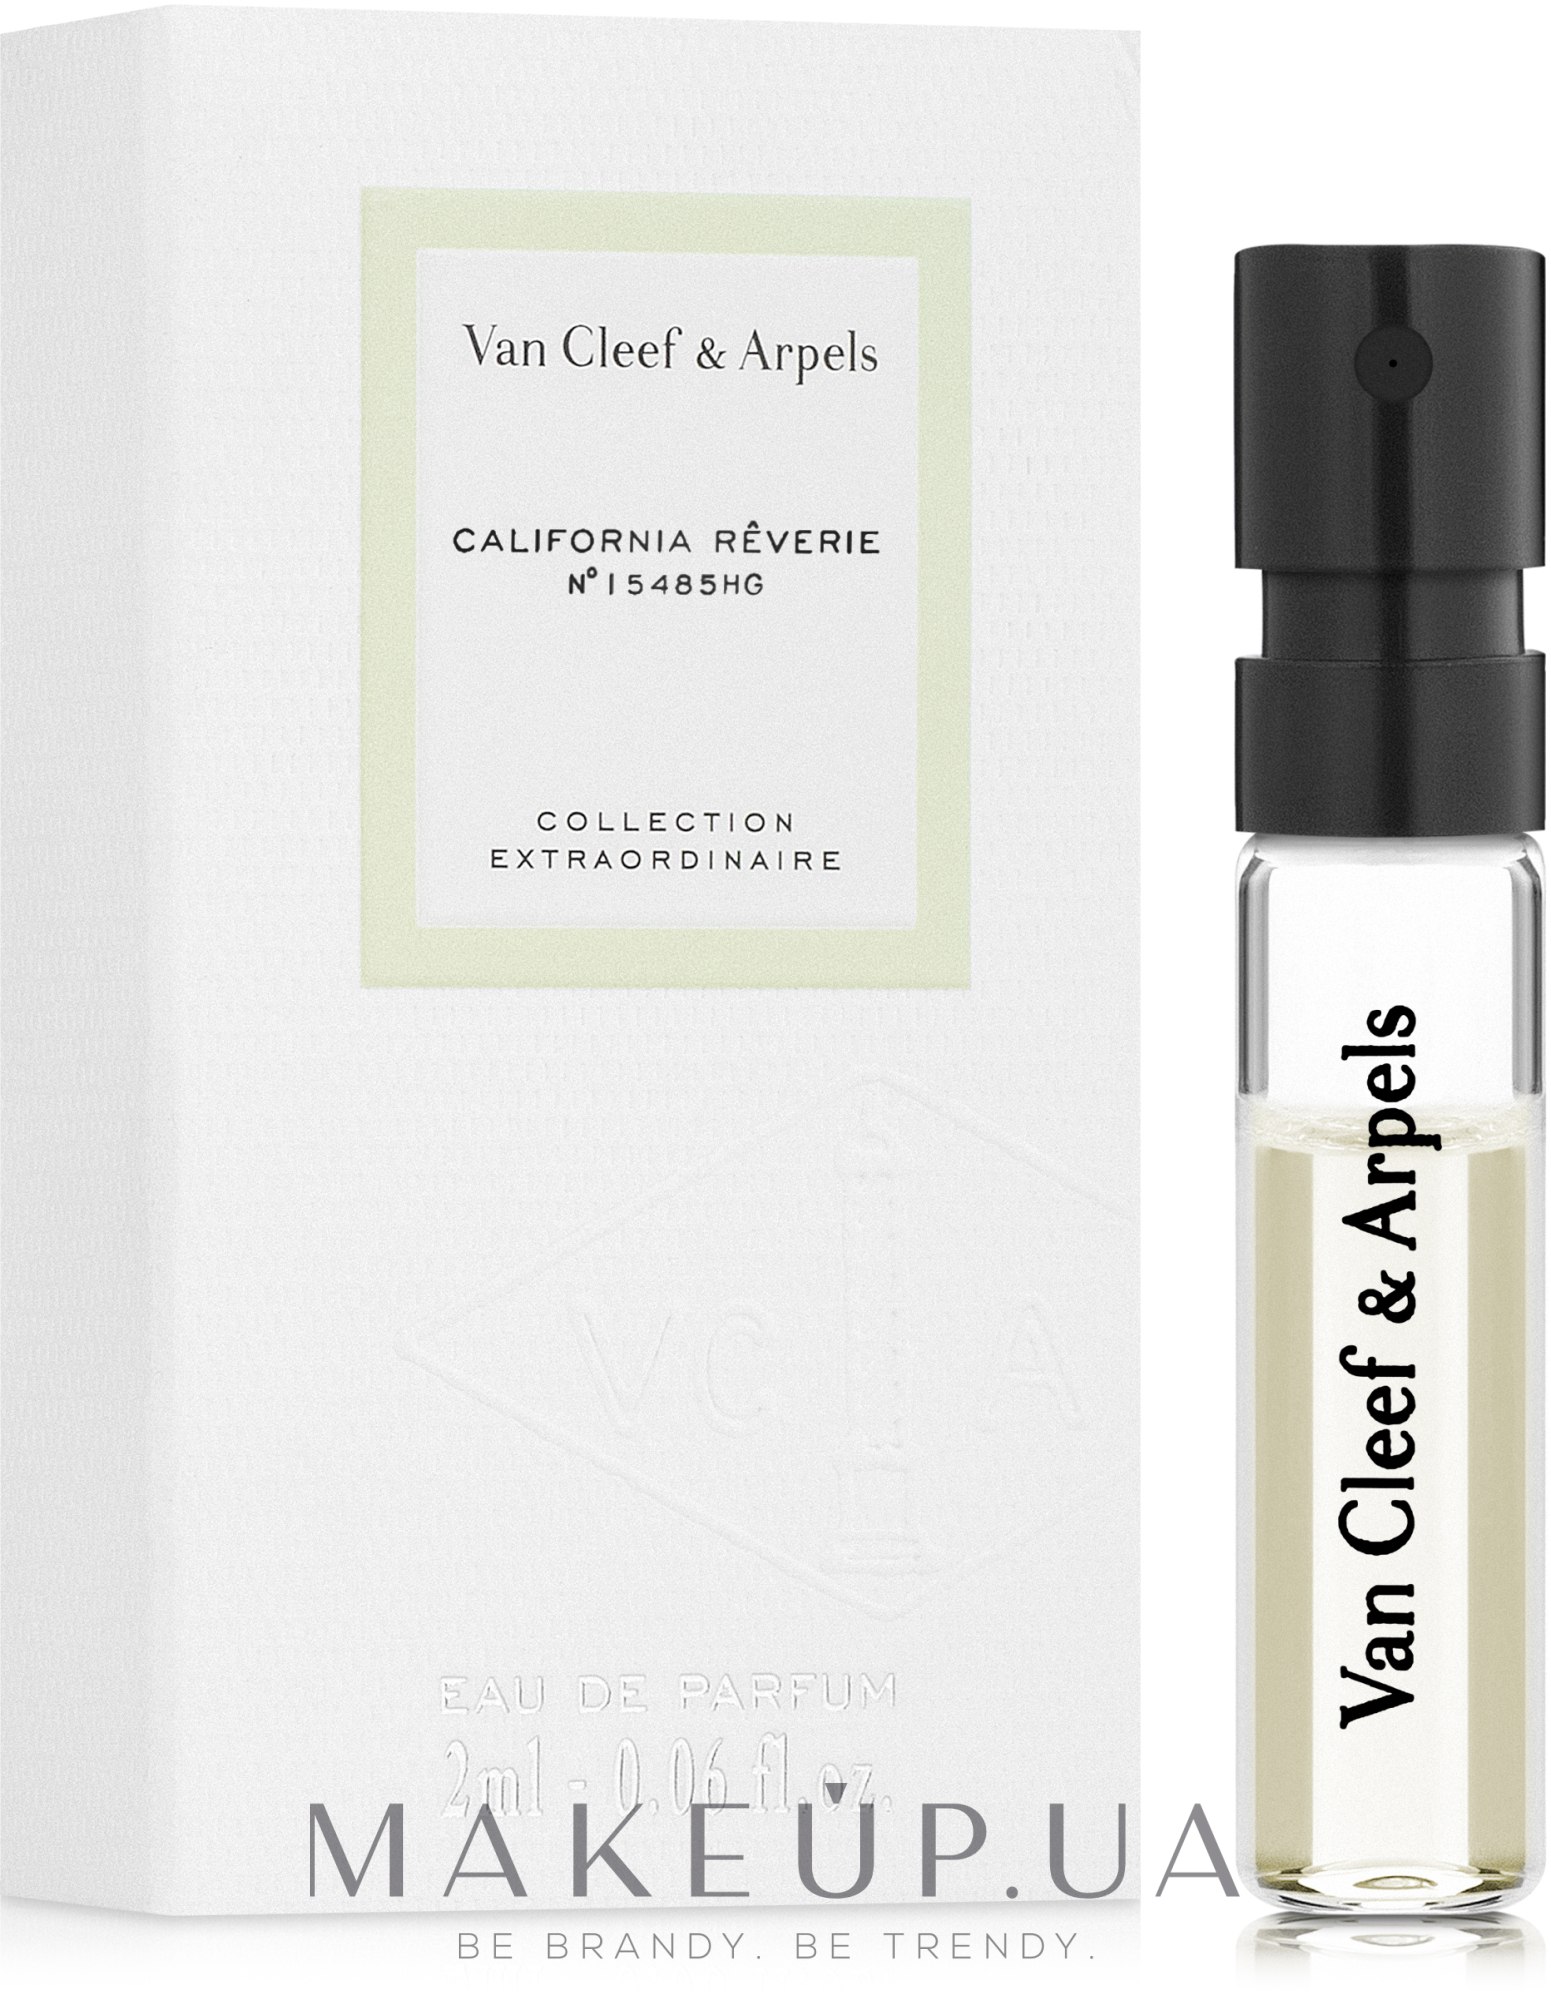 Van Cleef & Arpels Collection Extraordinaire California Reverie - Парфюмированная вода (пробник) — фото 2ml